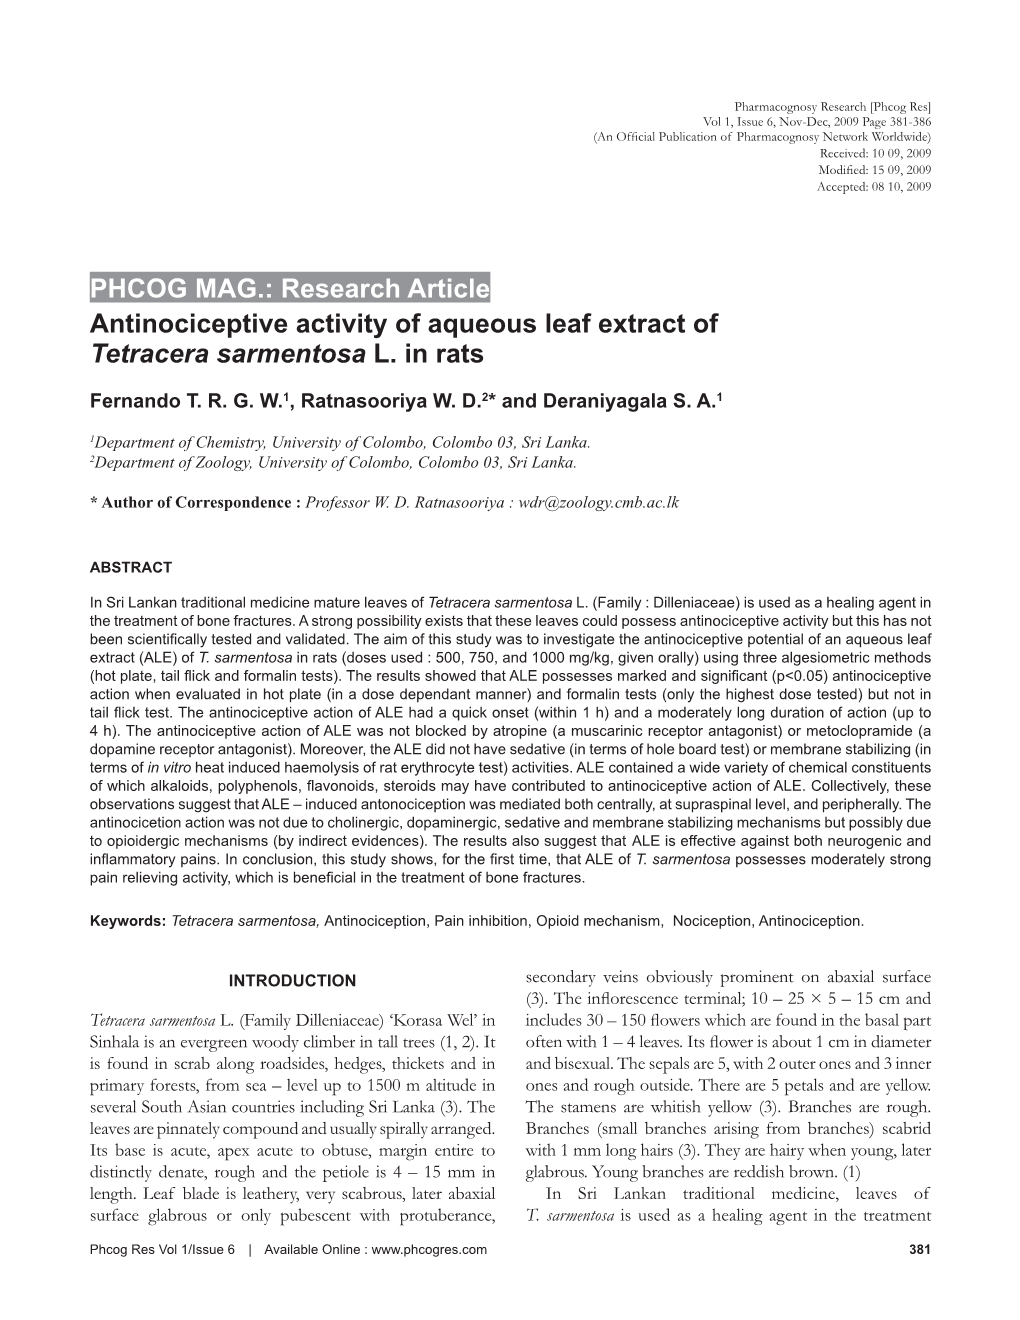 Antinociceptive Activity of Aqueous Leaf Extract of Tetracera Sarmentosa L